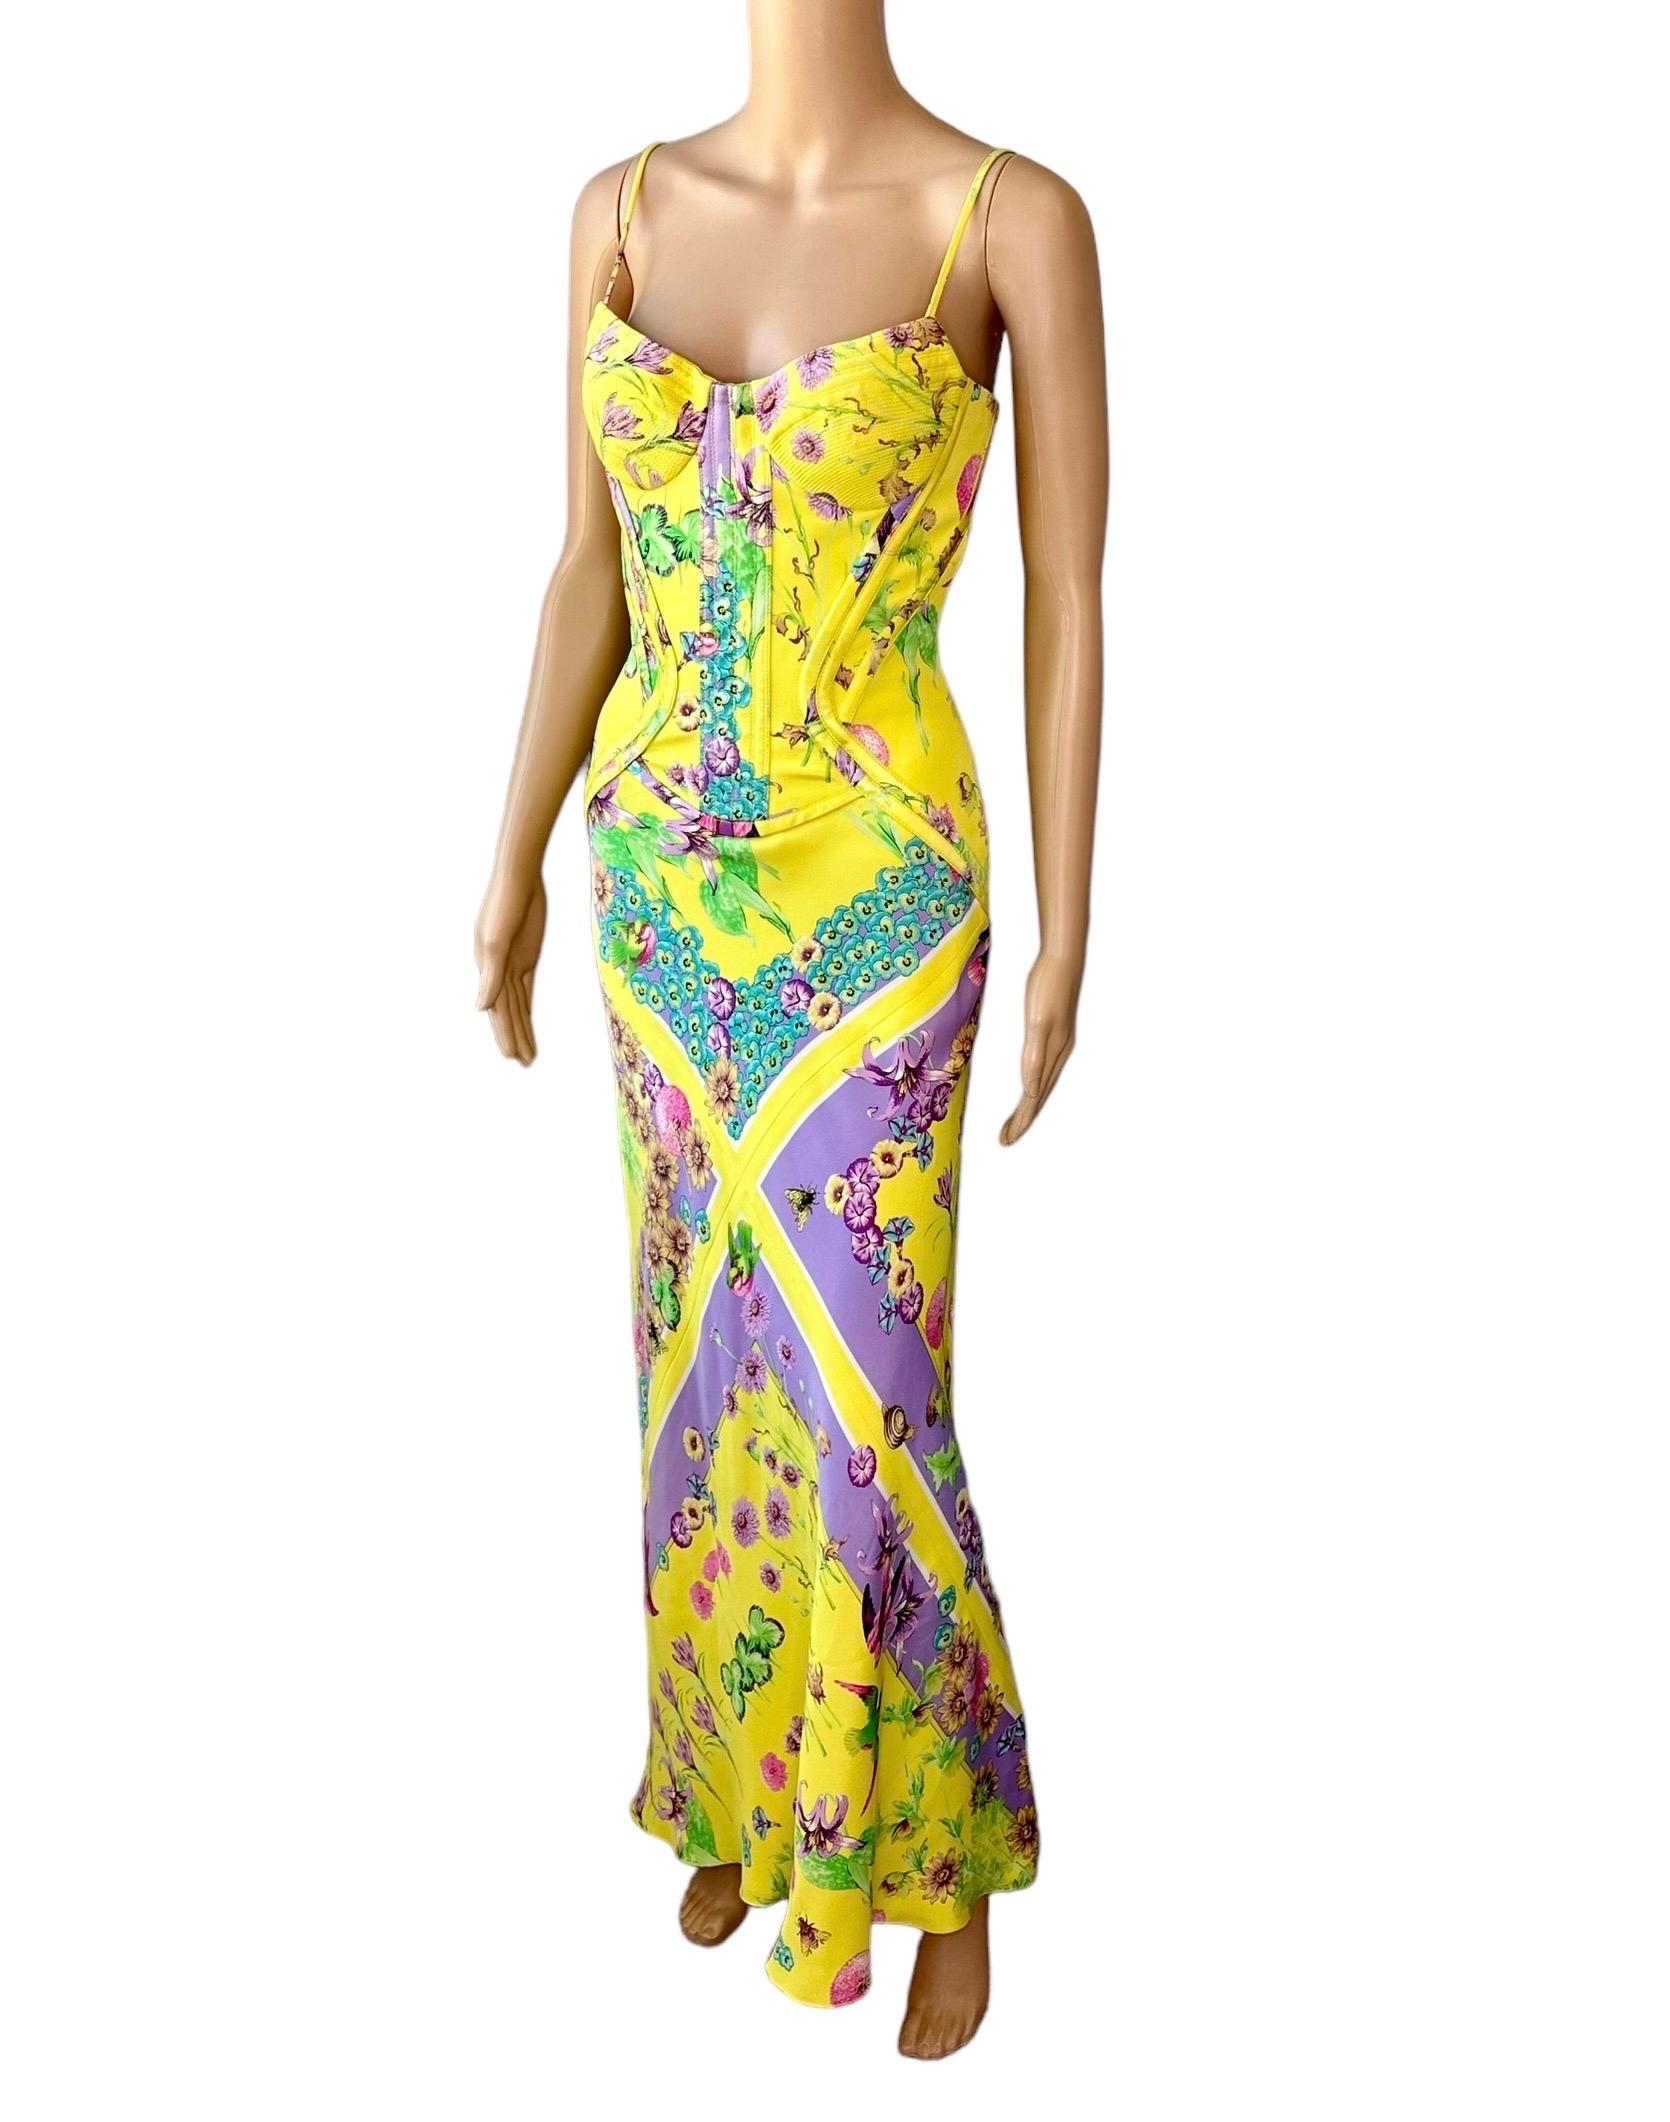 Versace S/S 2006 Bustier Corset Floral Print Evening Dress Gown 5